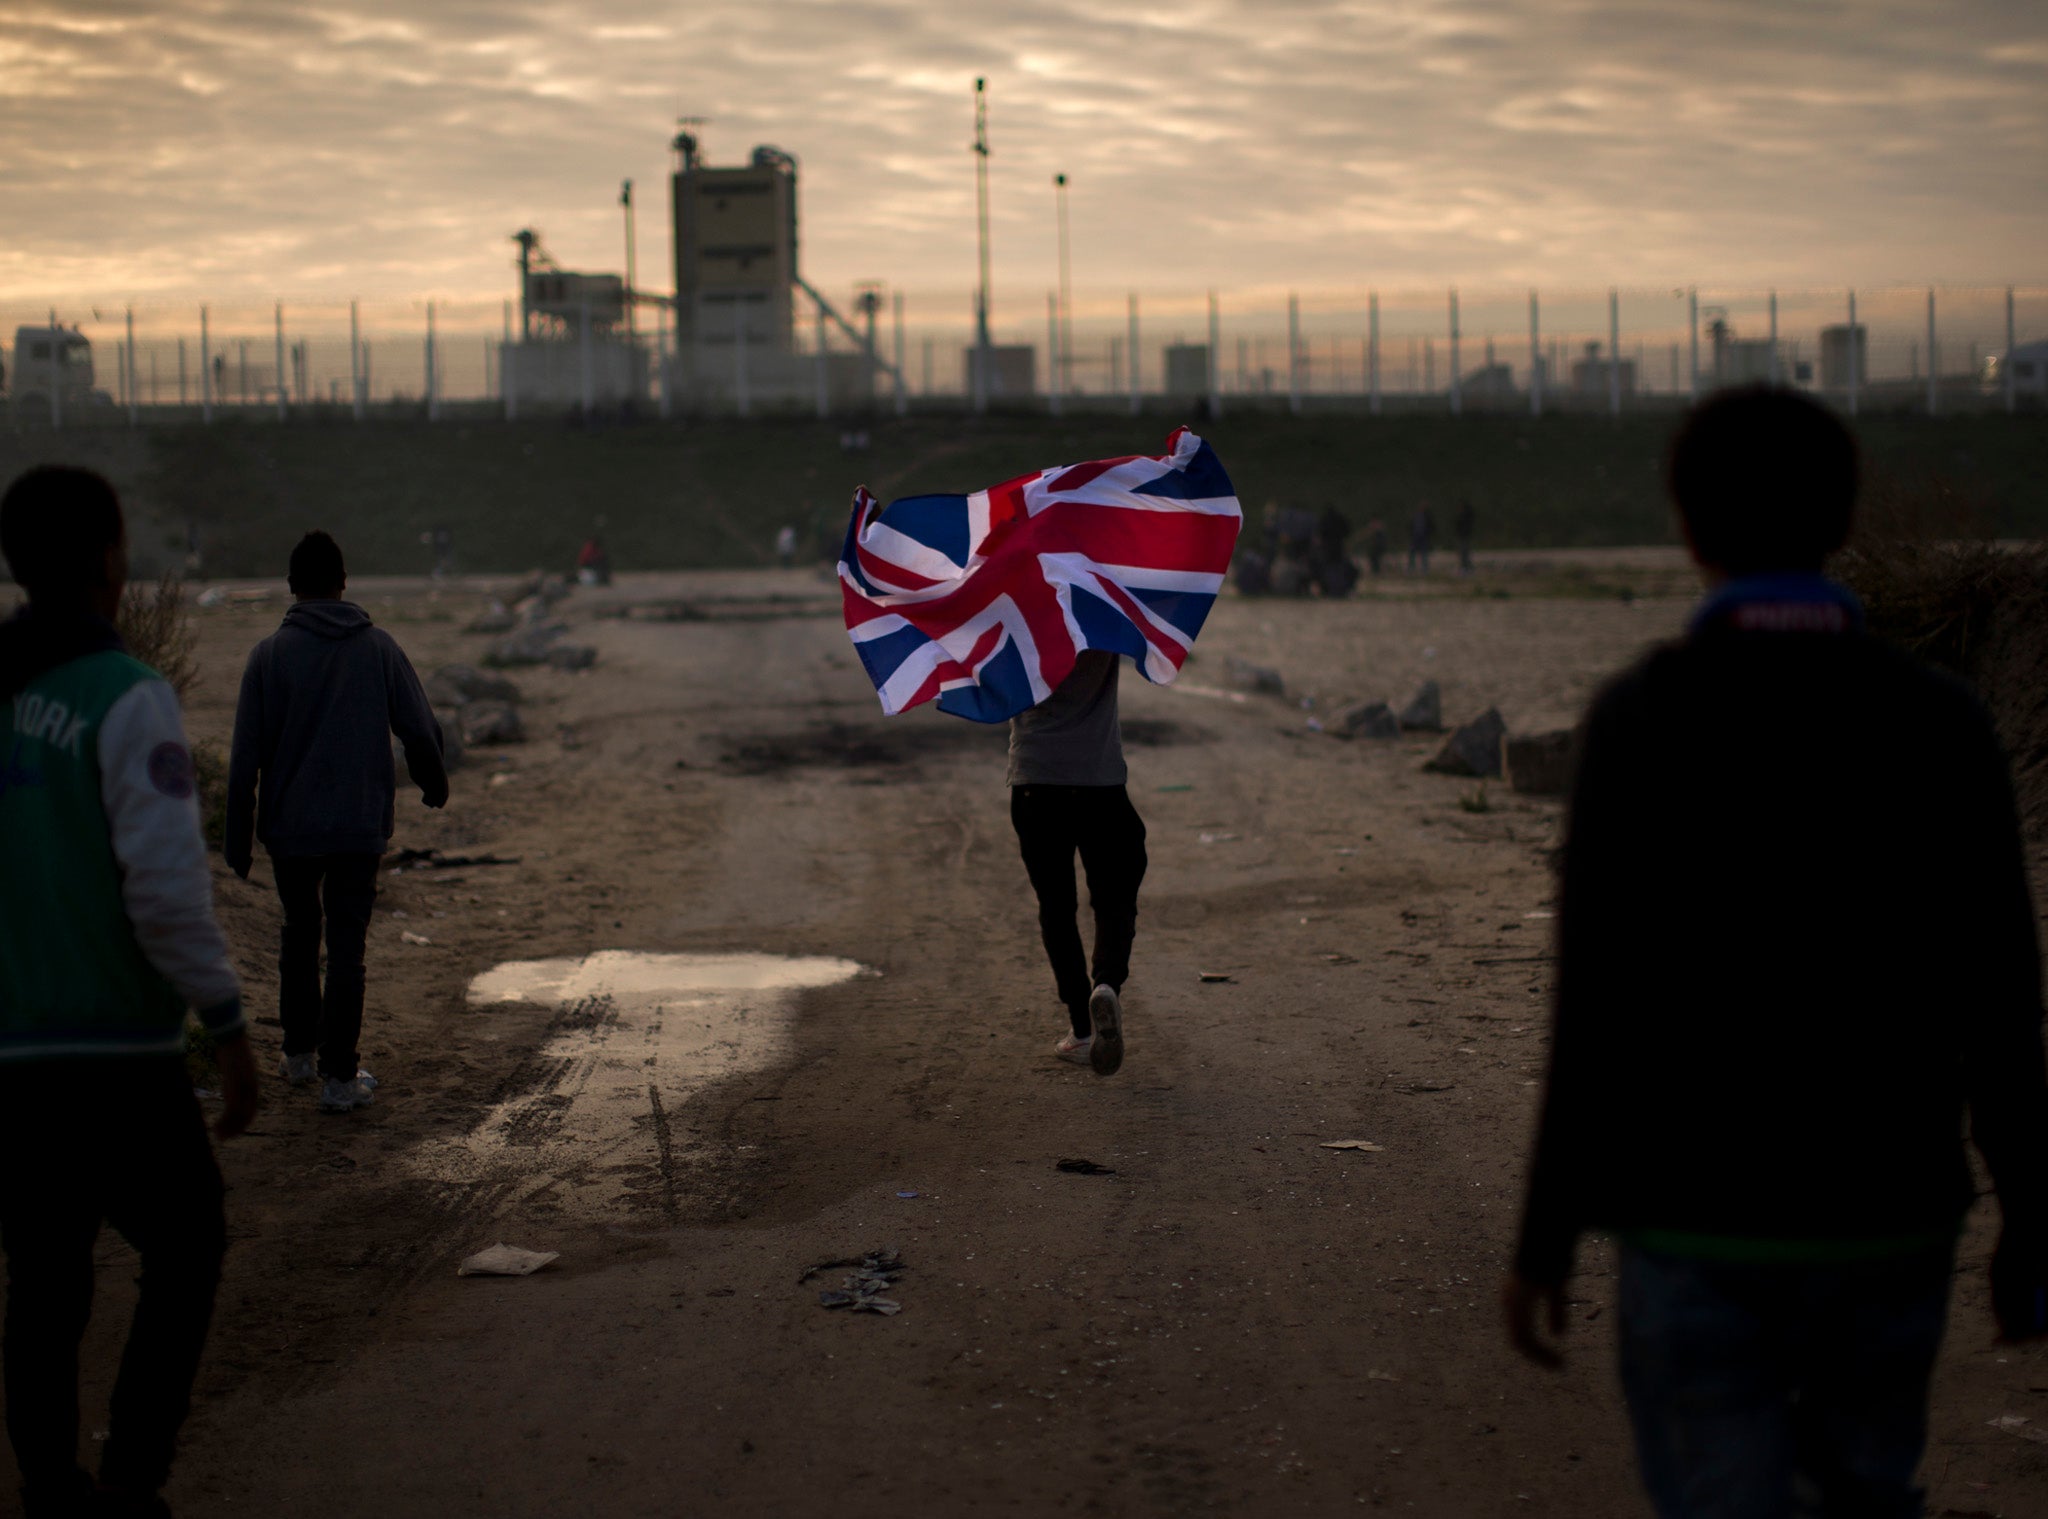 A man runs with a British flag during the mass evacuation of the Calais 'Jungle'